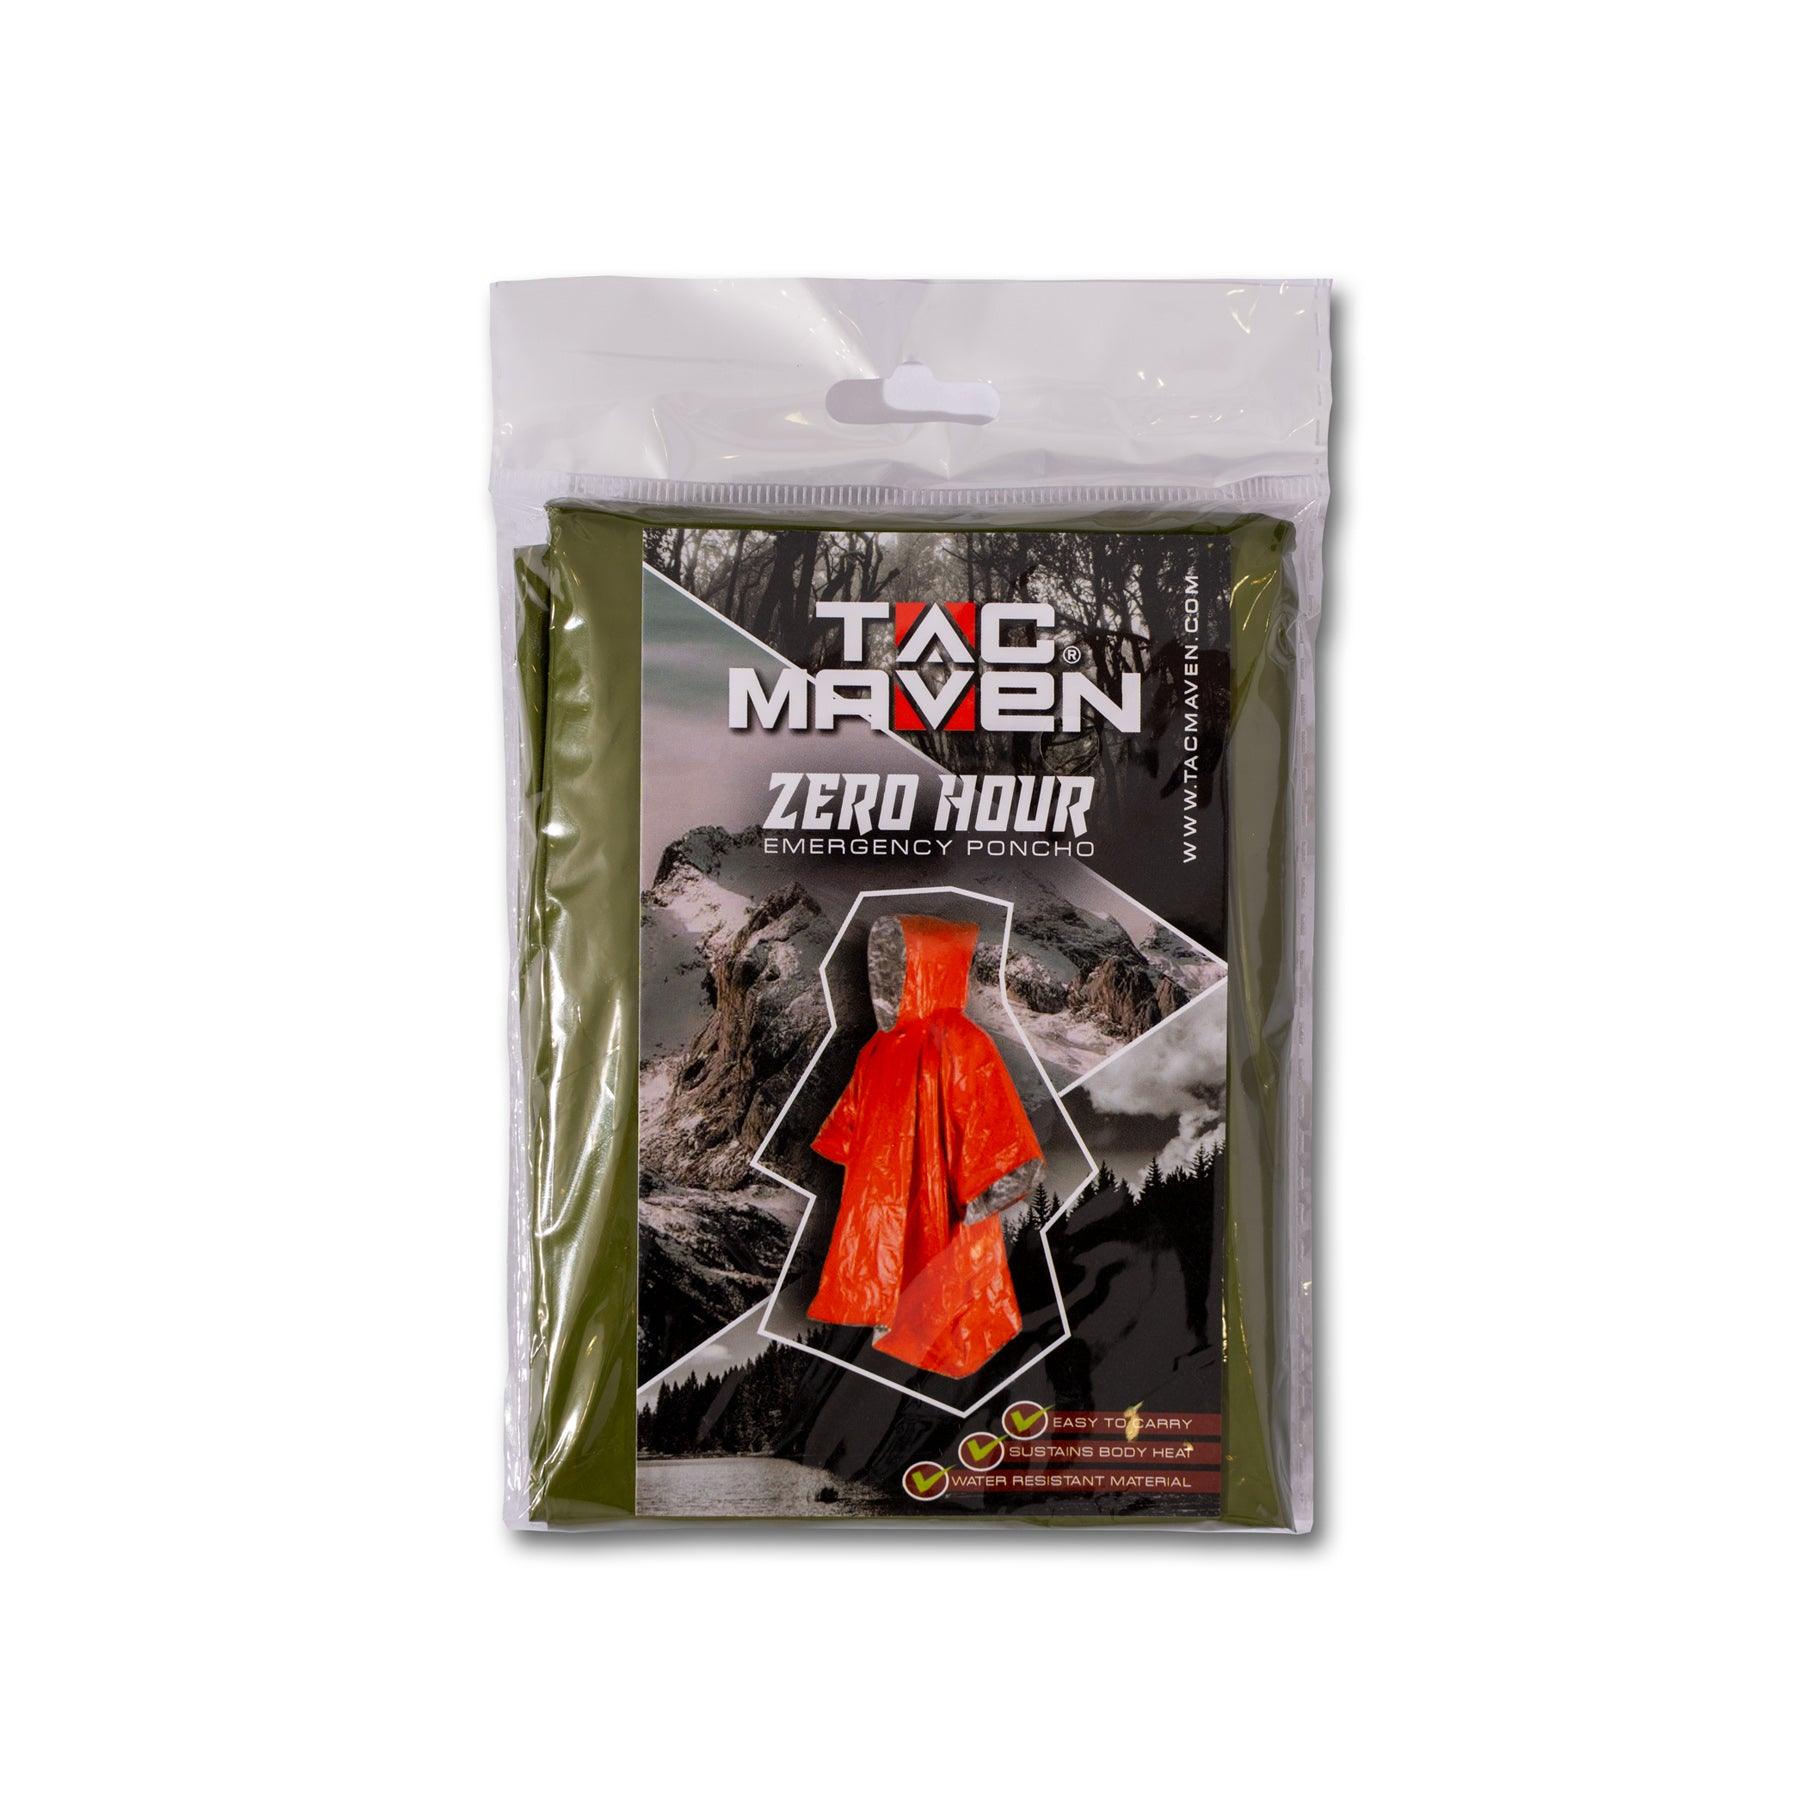 Köp Tac Maven Zero Hour Emergency Poncho från TacNGear